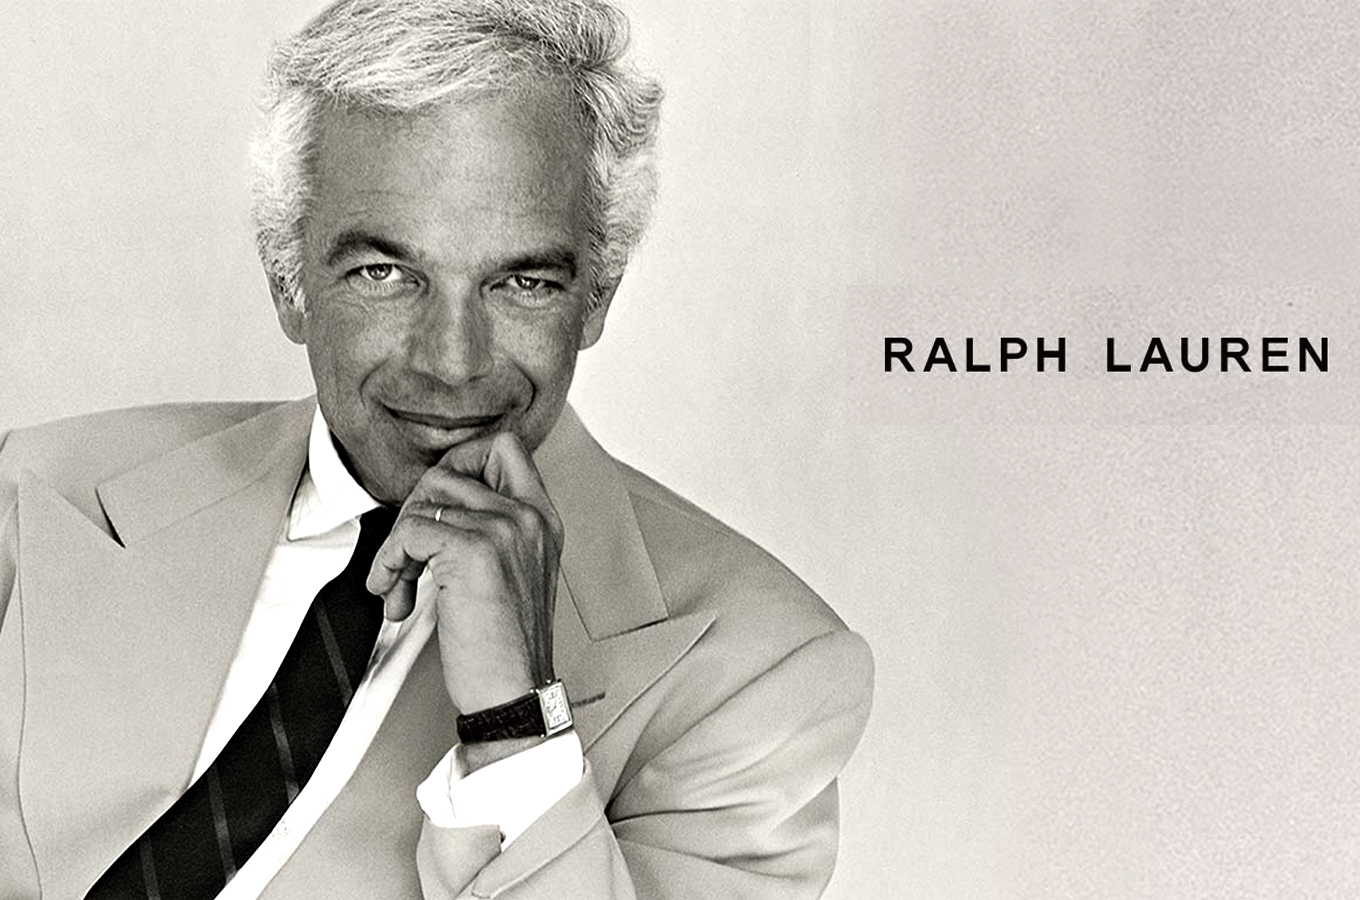 The 10 Richest Fashion Icons: Ralph Lauren Net Worth vs. Giorgio